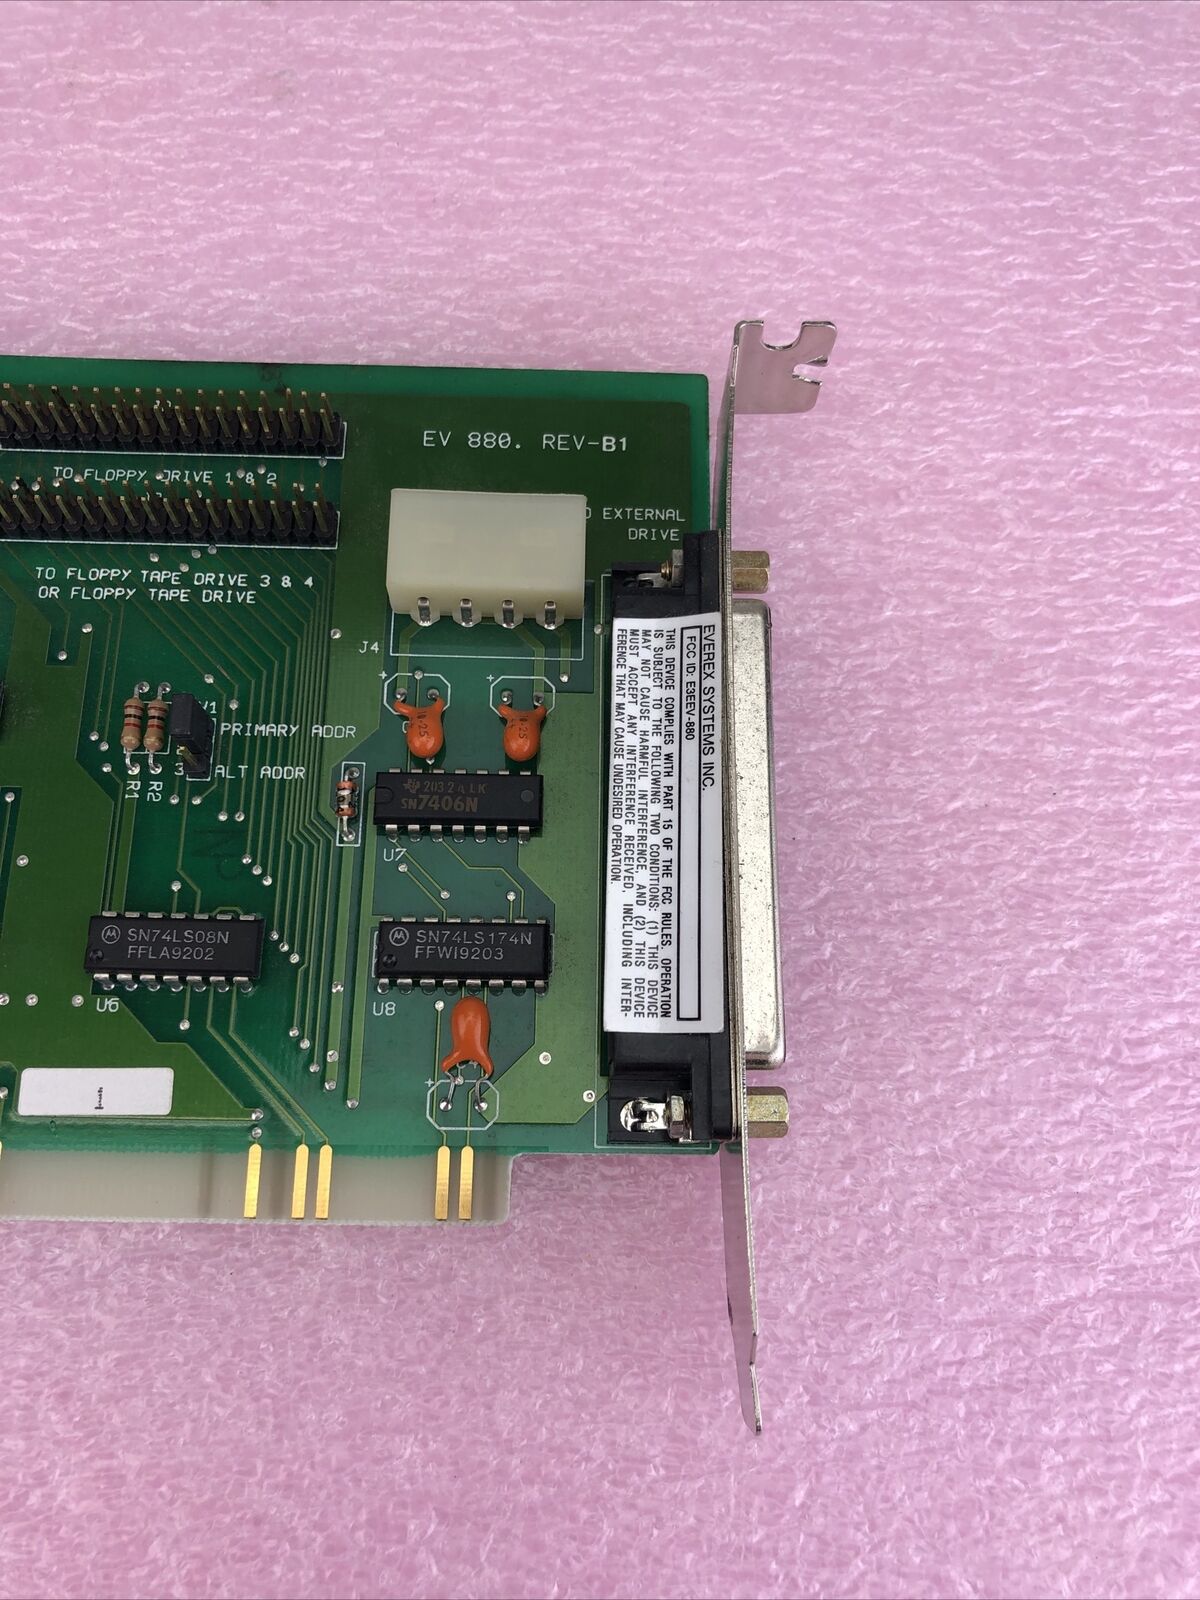 EVEREX PWA-00641-0001 Floppy & Tape Controller